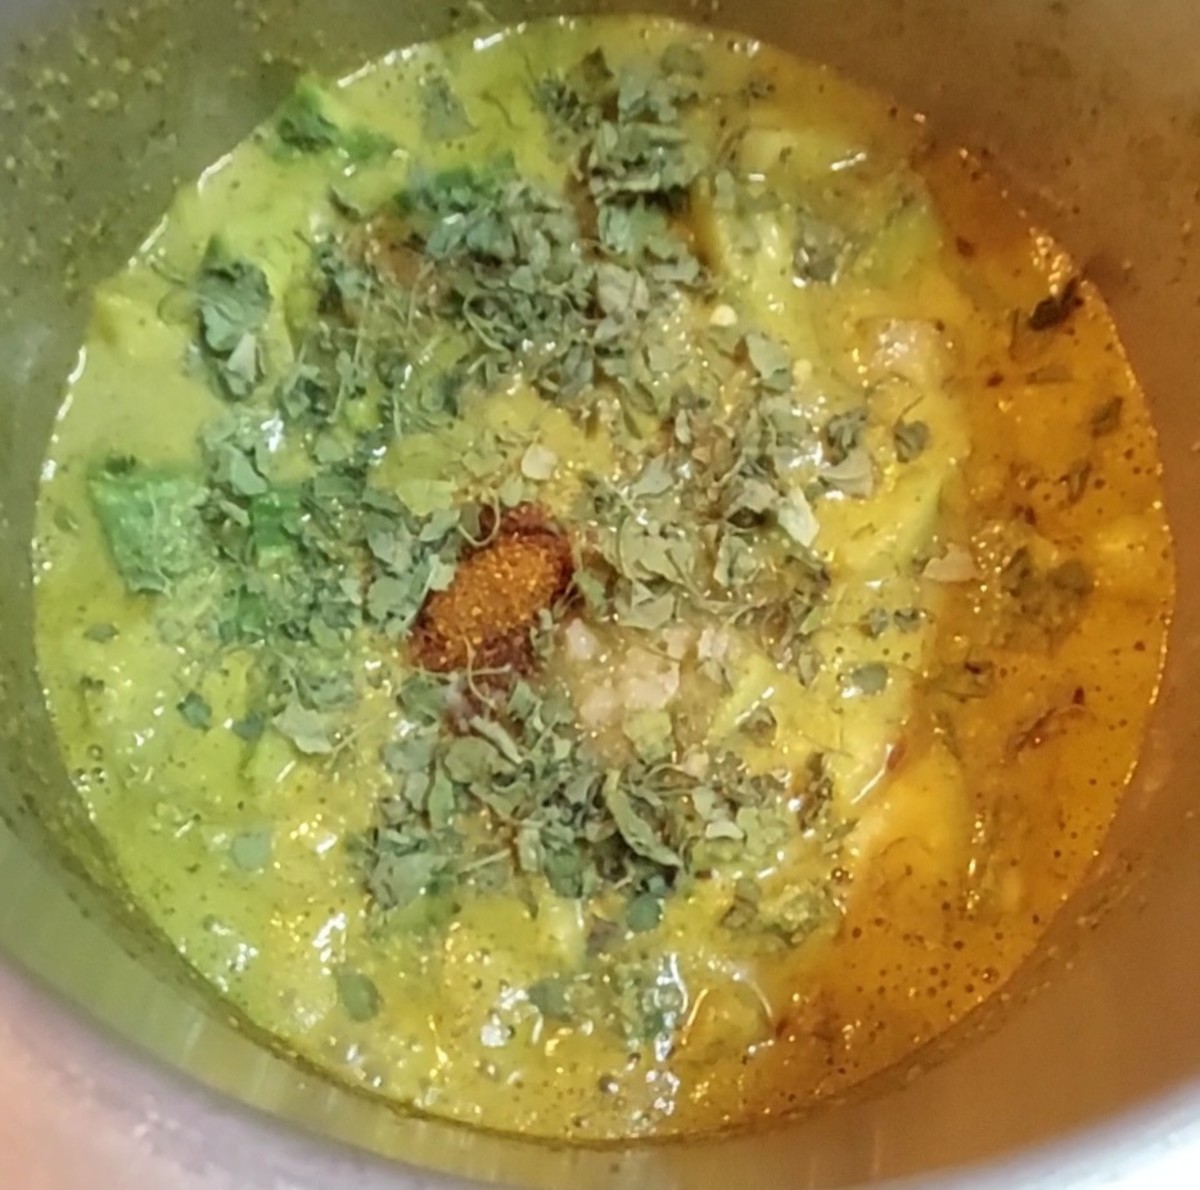 Add 1 cup of water and mix well. Add 1/2 teaspoon garam masala powder, salt to taste and 1 teaspoon kasuri methi. Mix well.